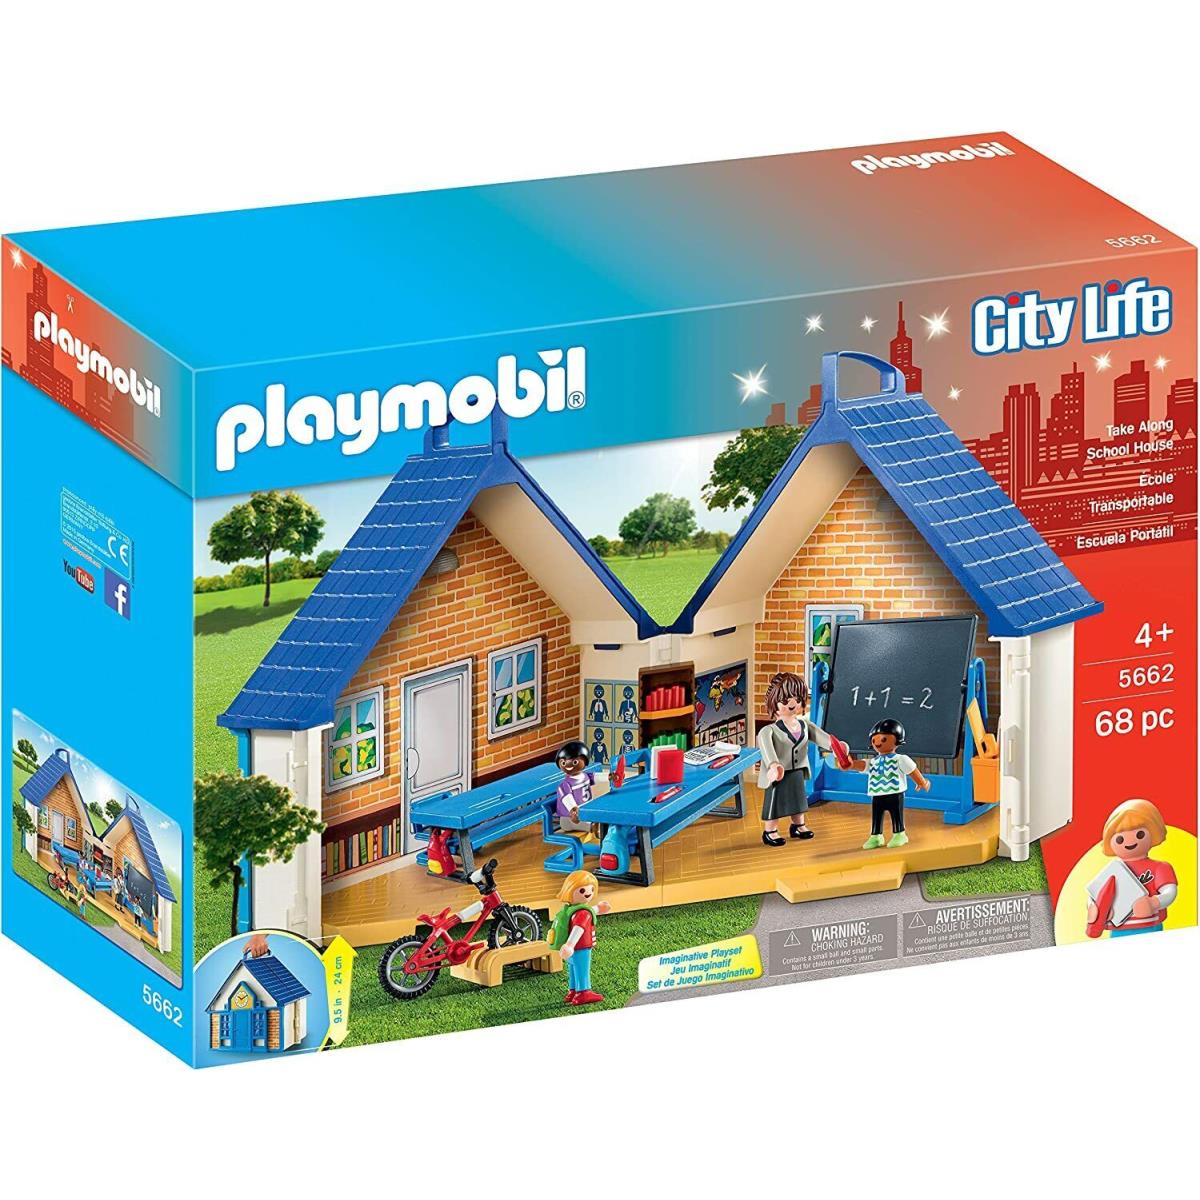 Playmobil City Life Take Along School House 68 Pieces